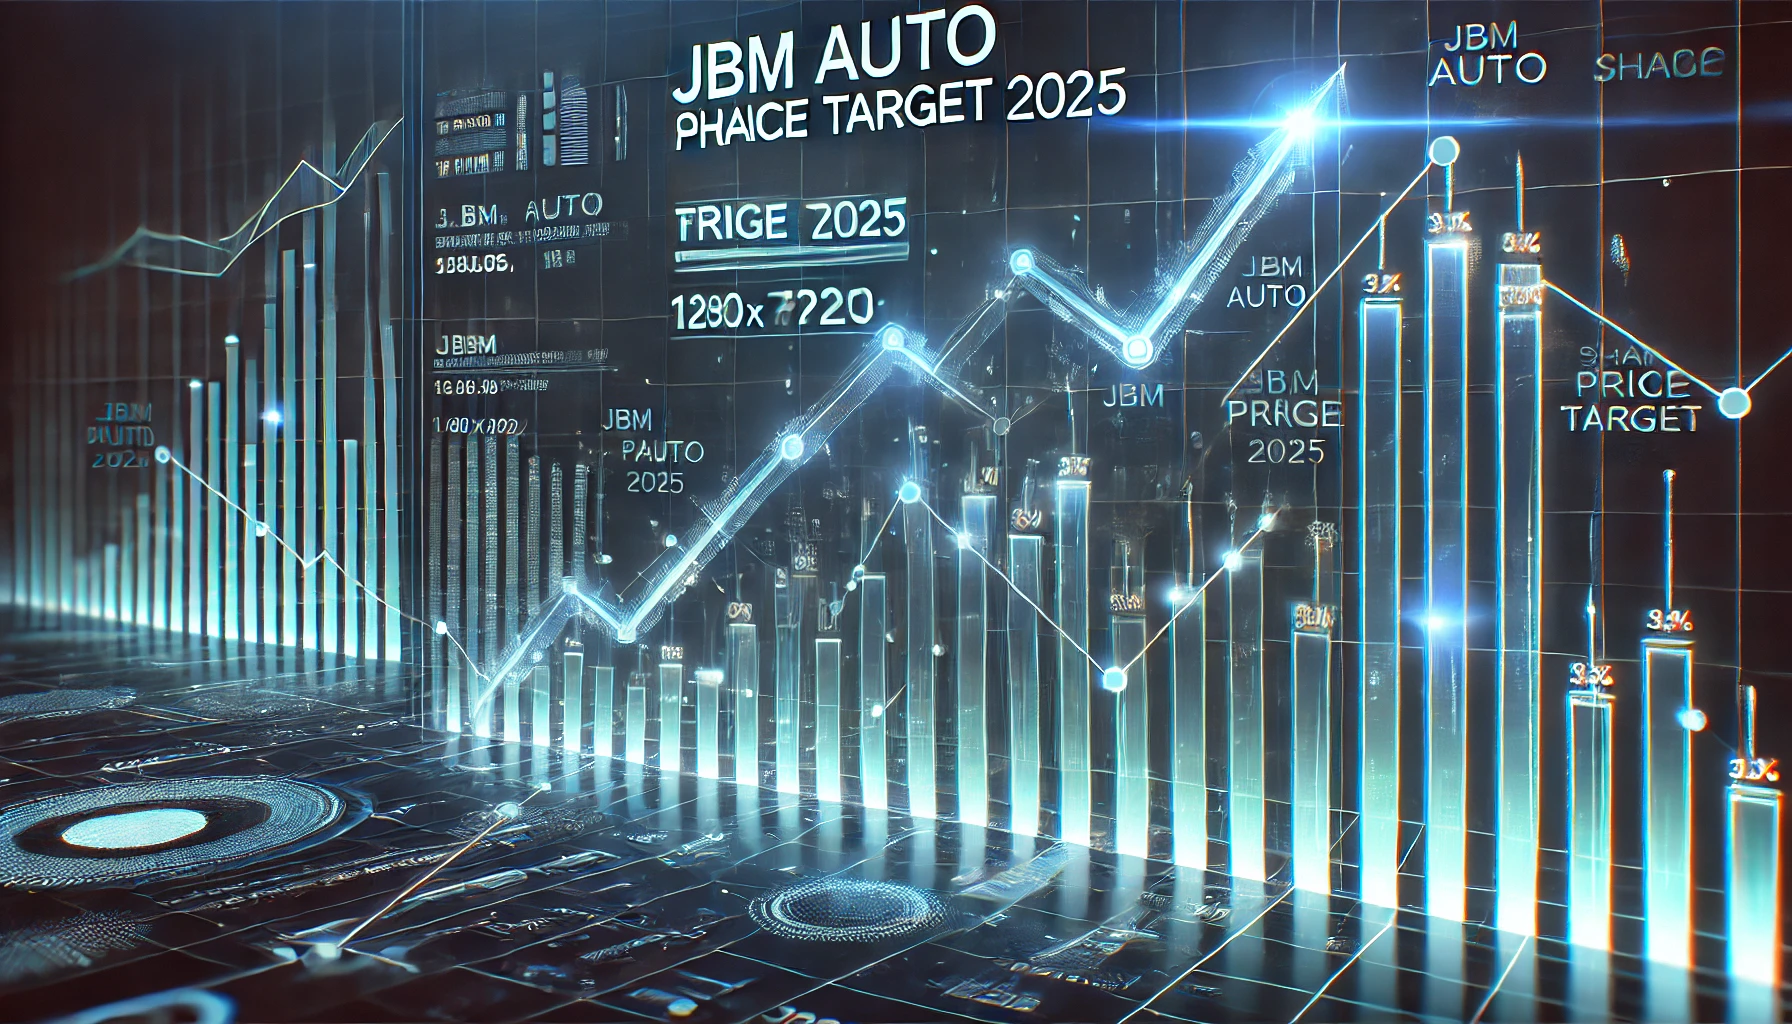 Jbm Auto Share Price Target 2025